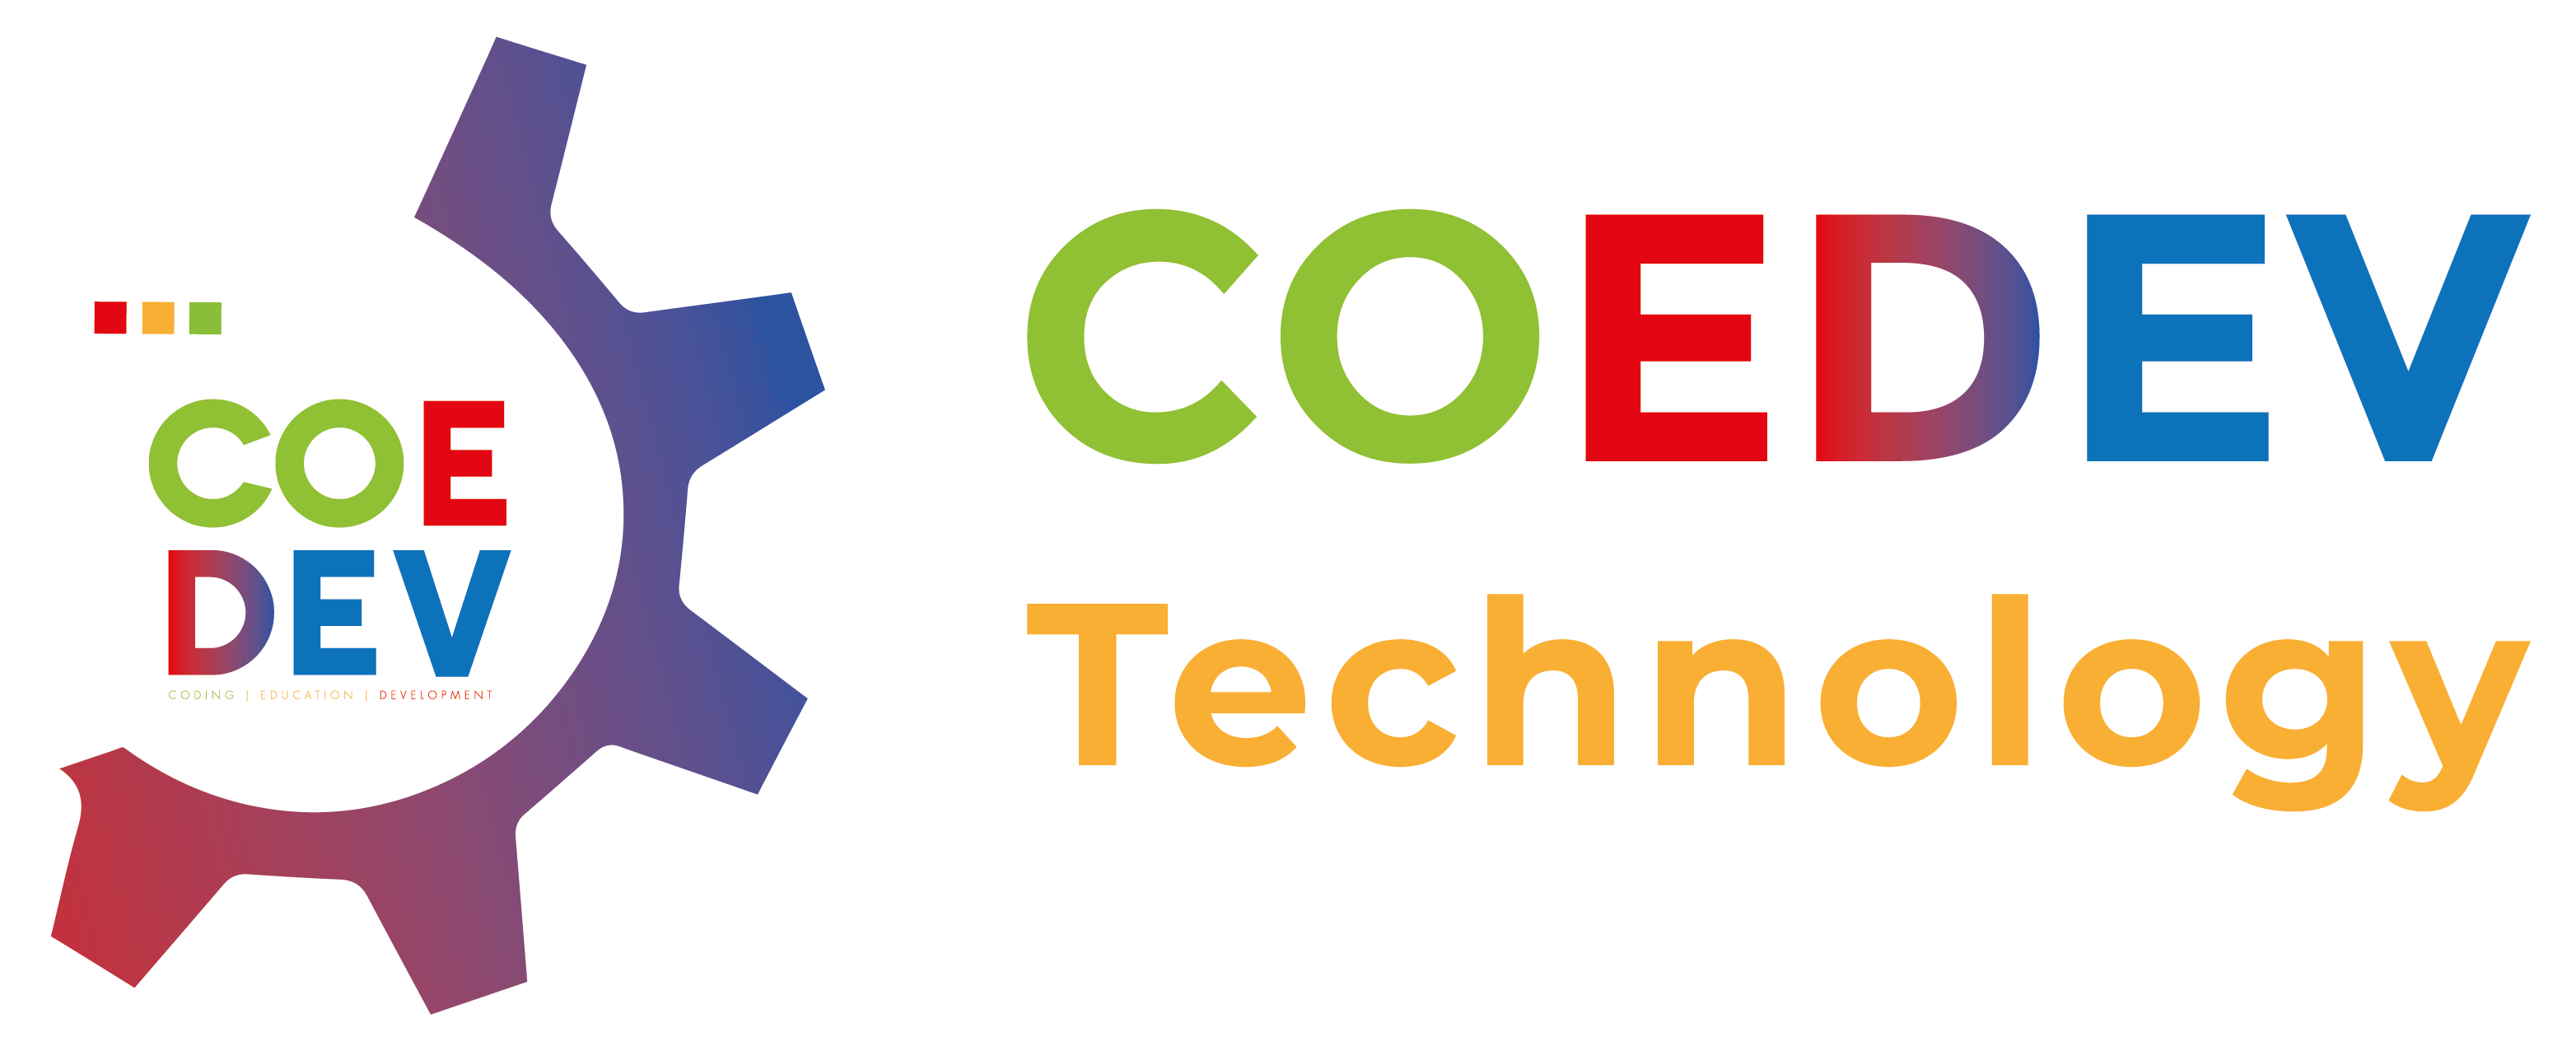 Coedev Technology